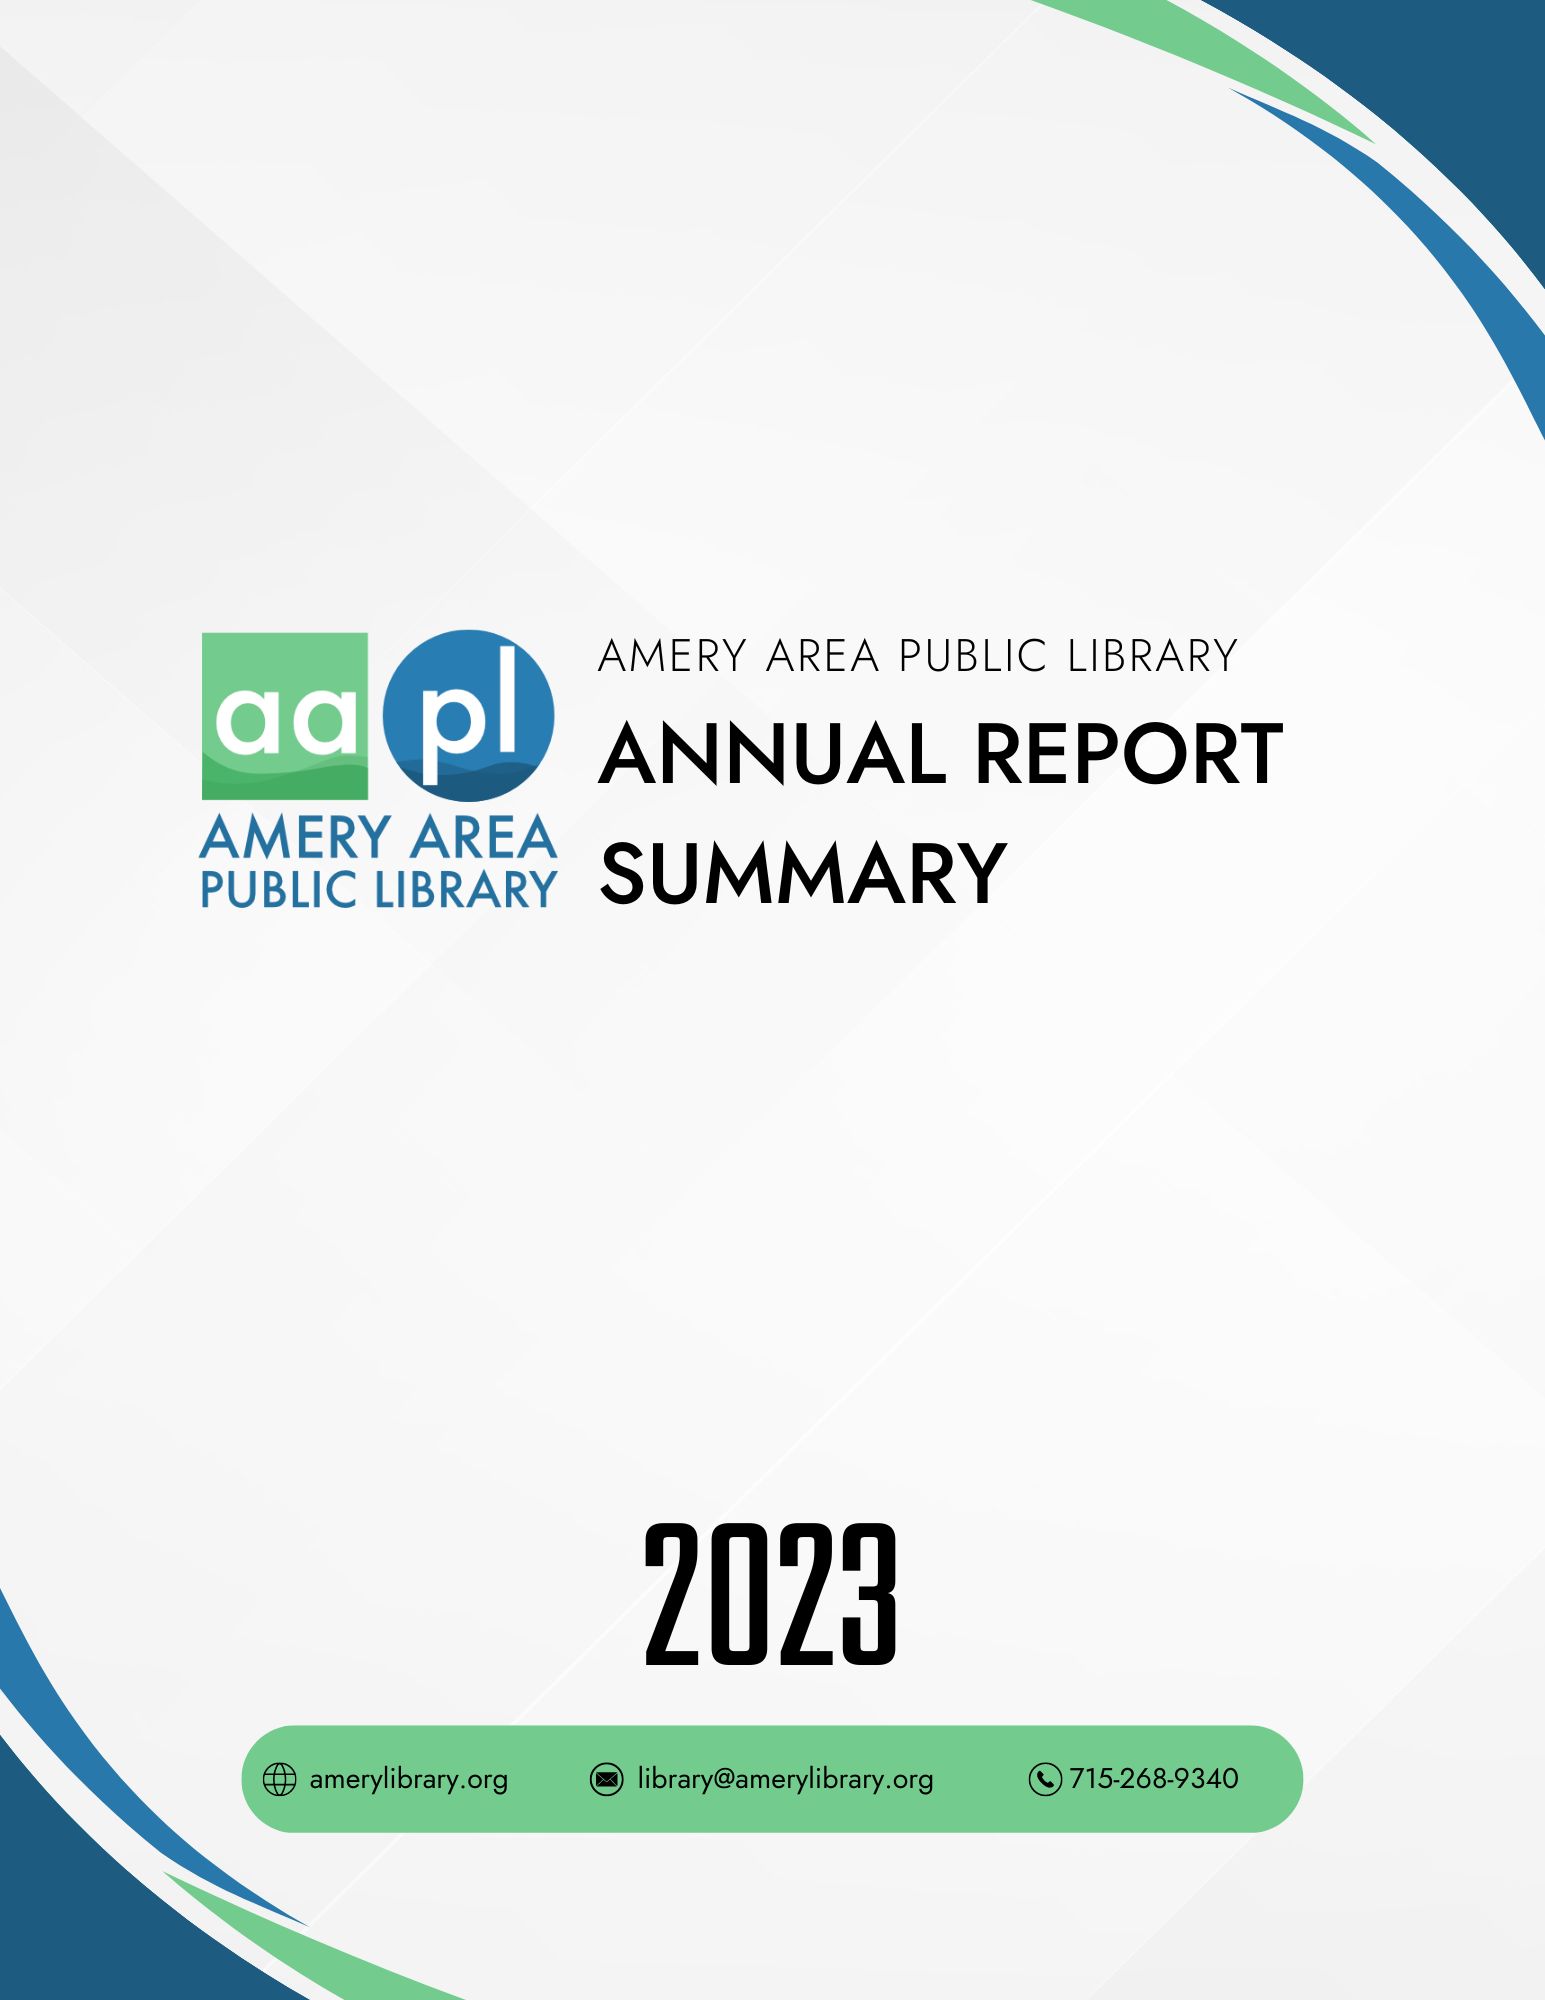 2023 Annual Report Summary